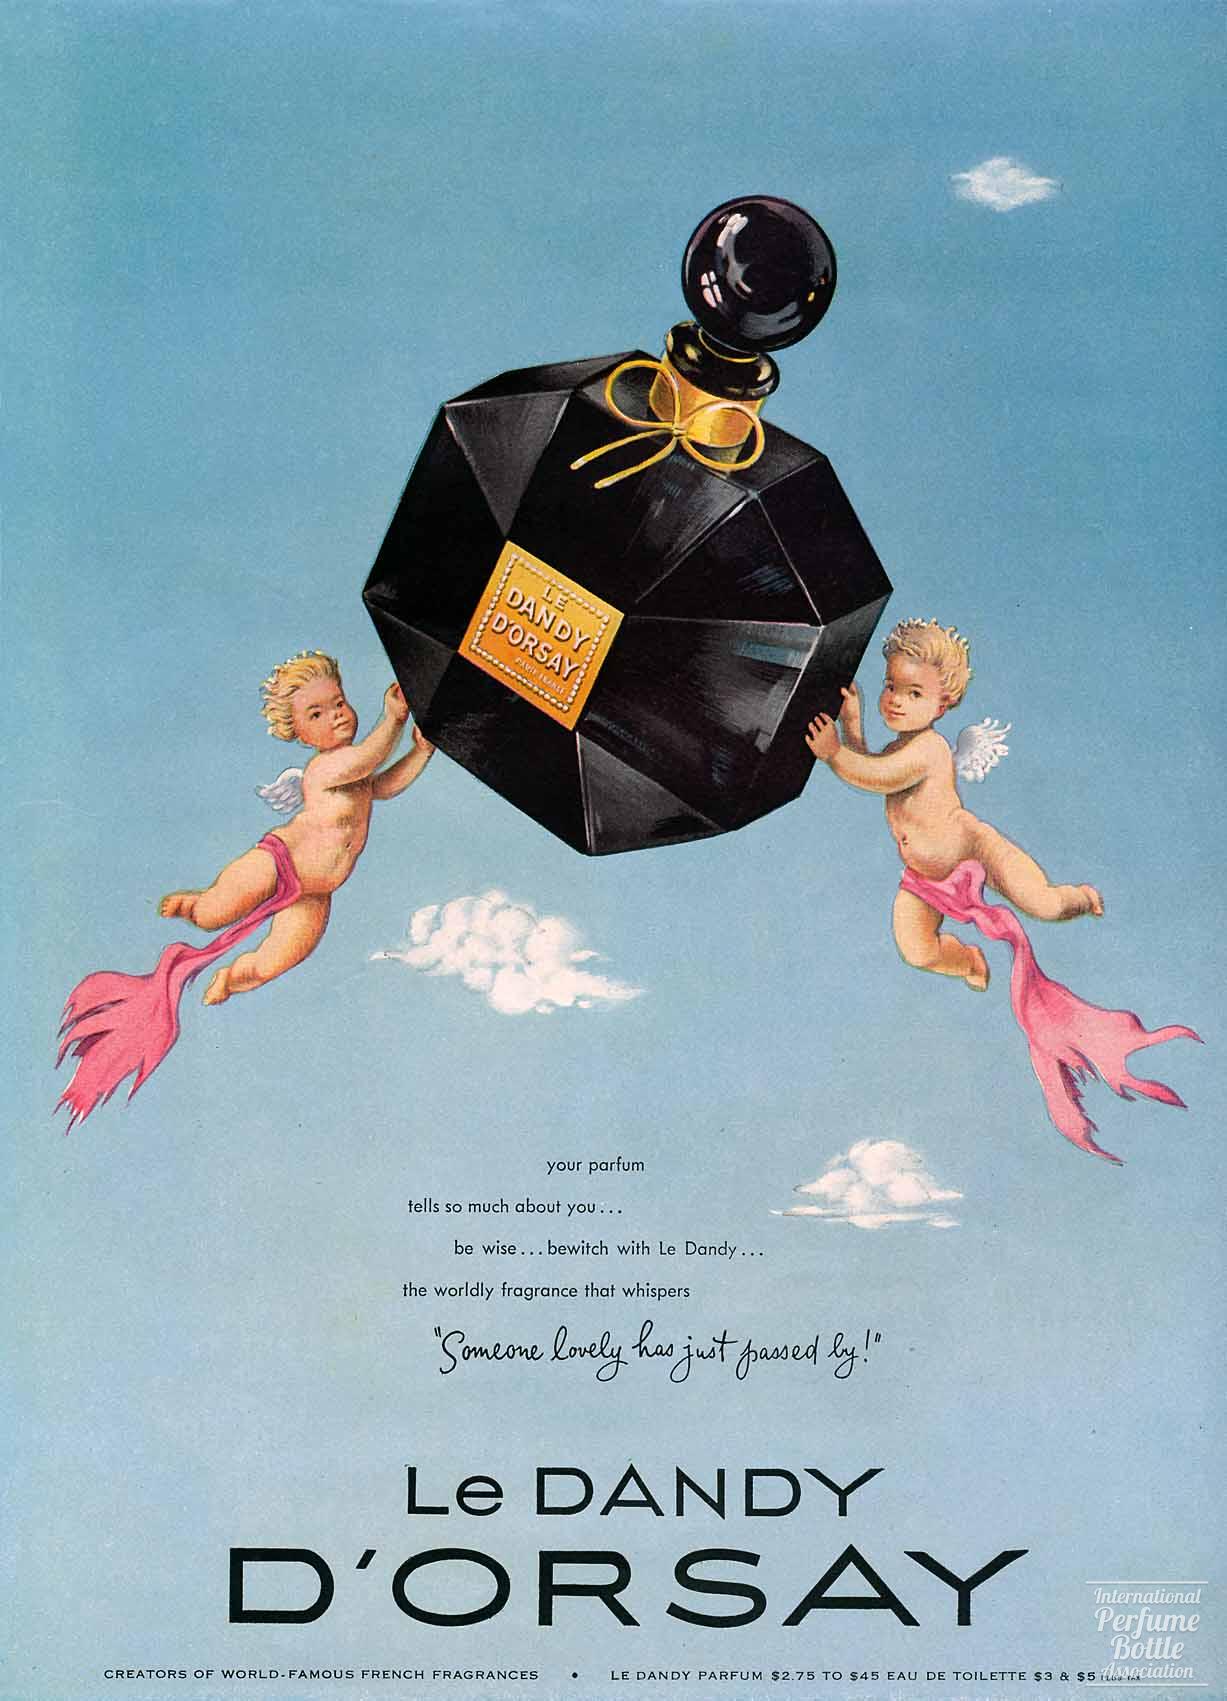 "Le Dandy" by D'Orsay Cherub Advertisement - 1951